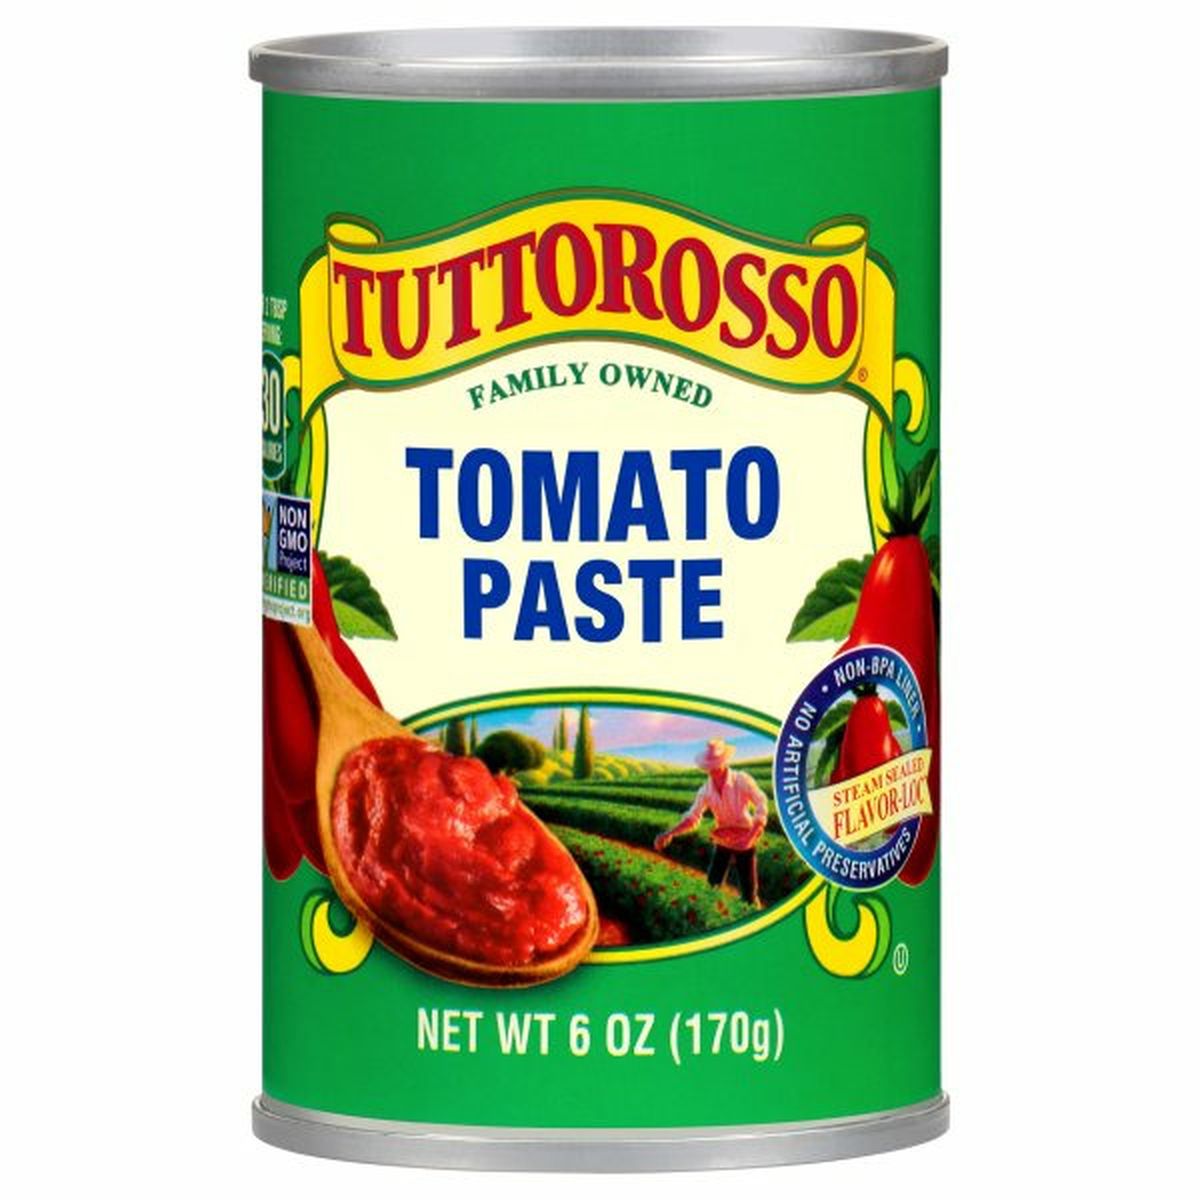 Calories in Tuttorosso Tomatoes Tomato Paste